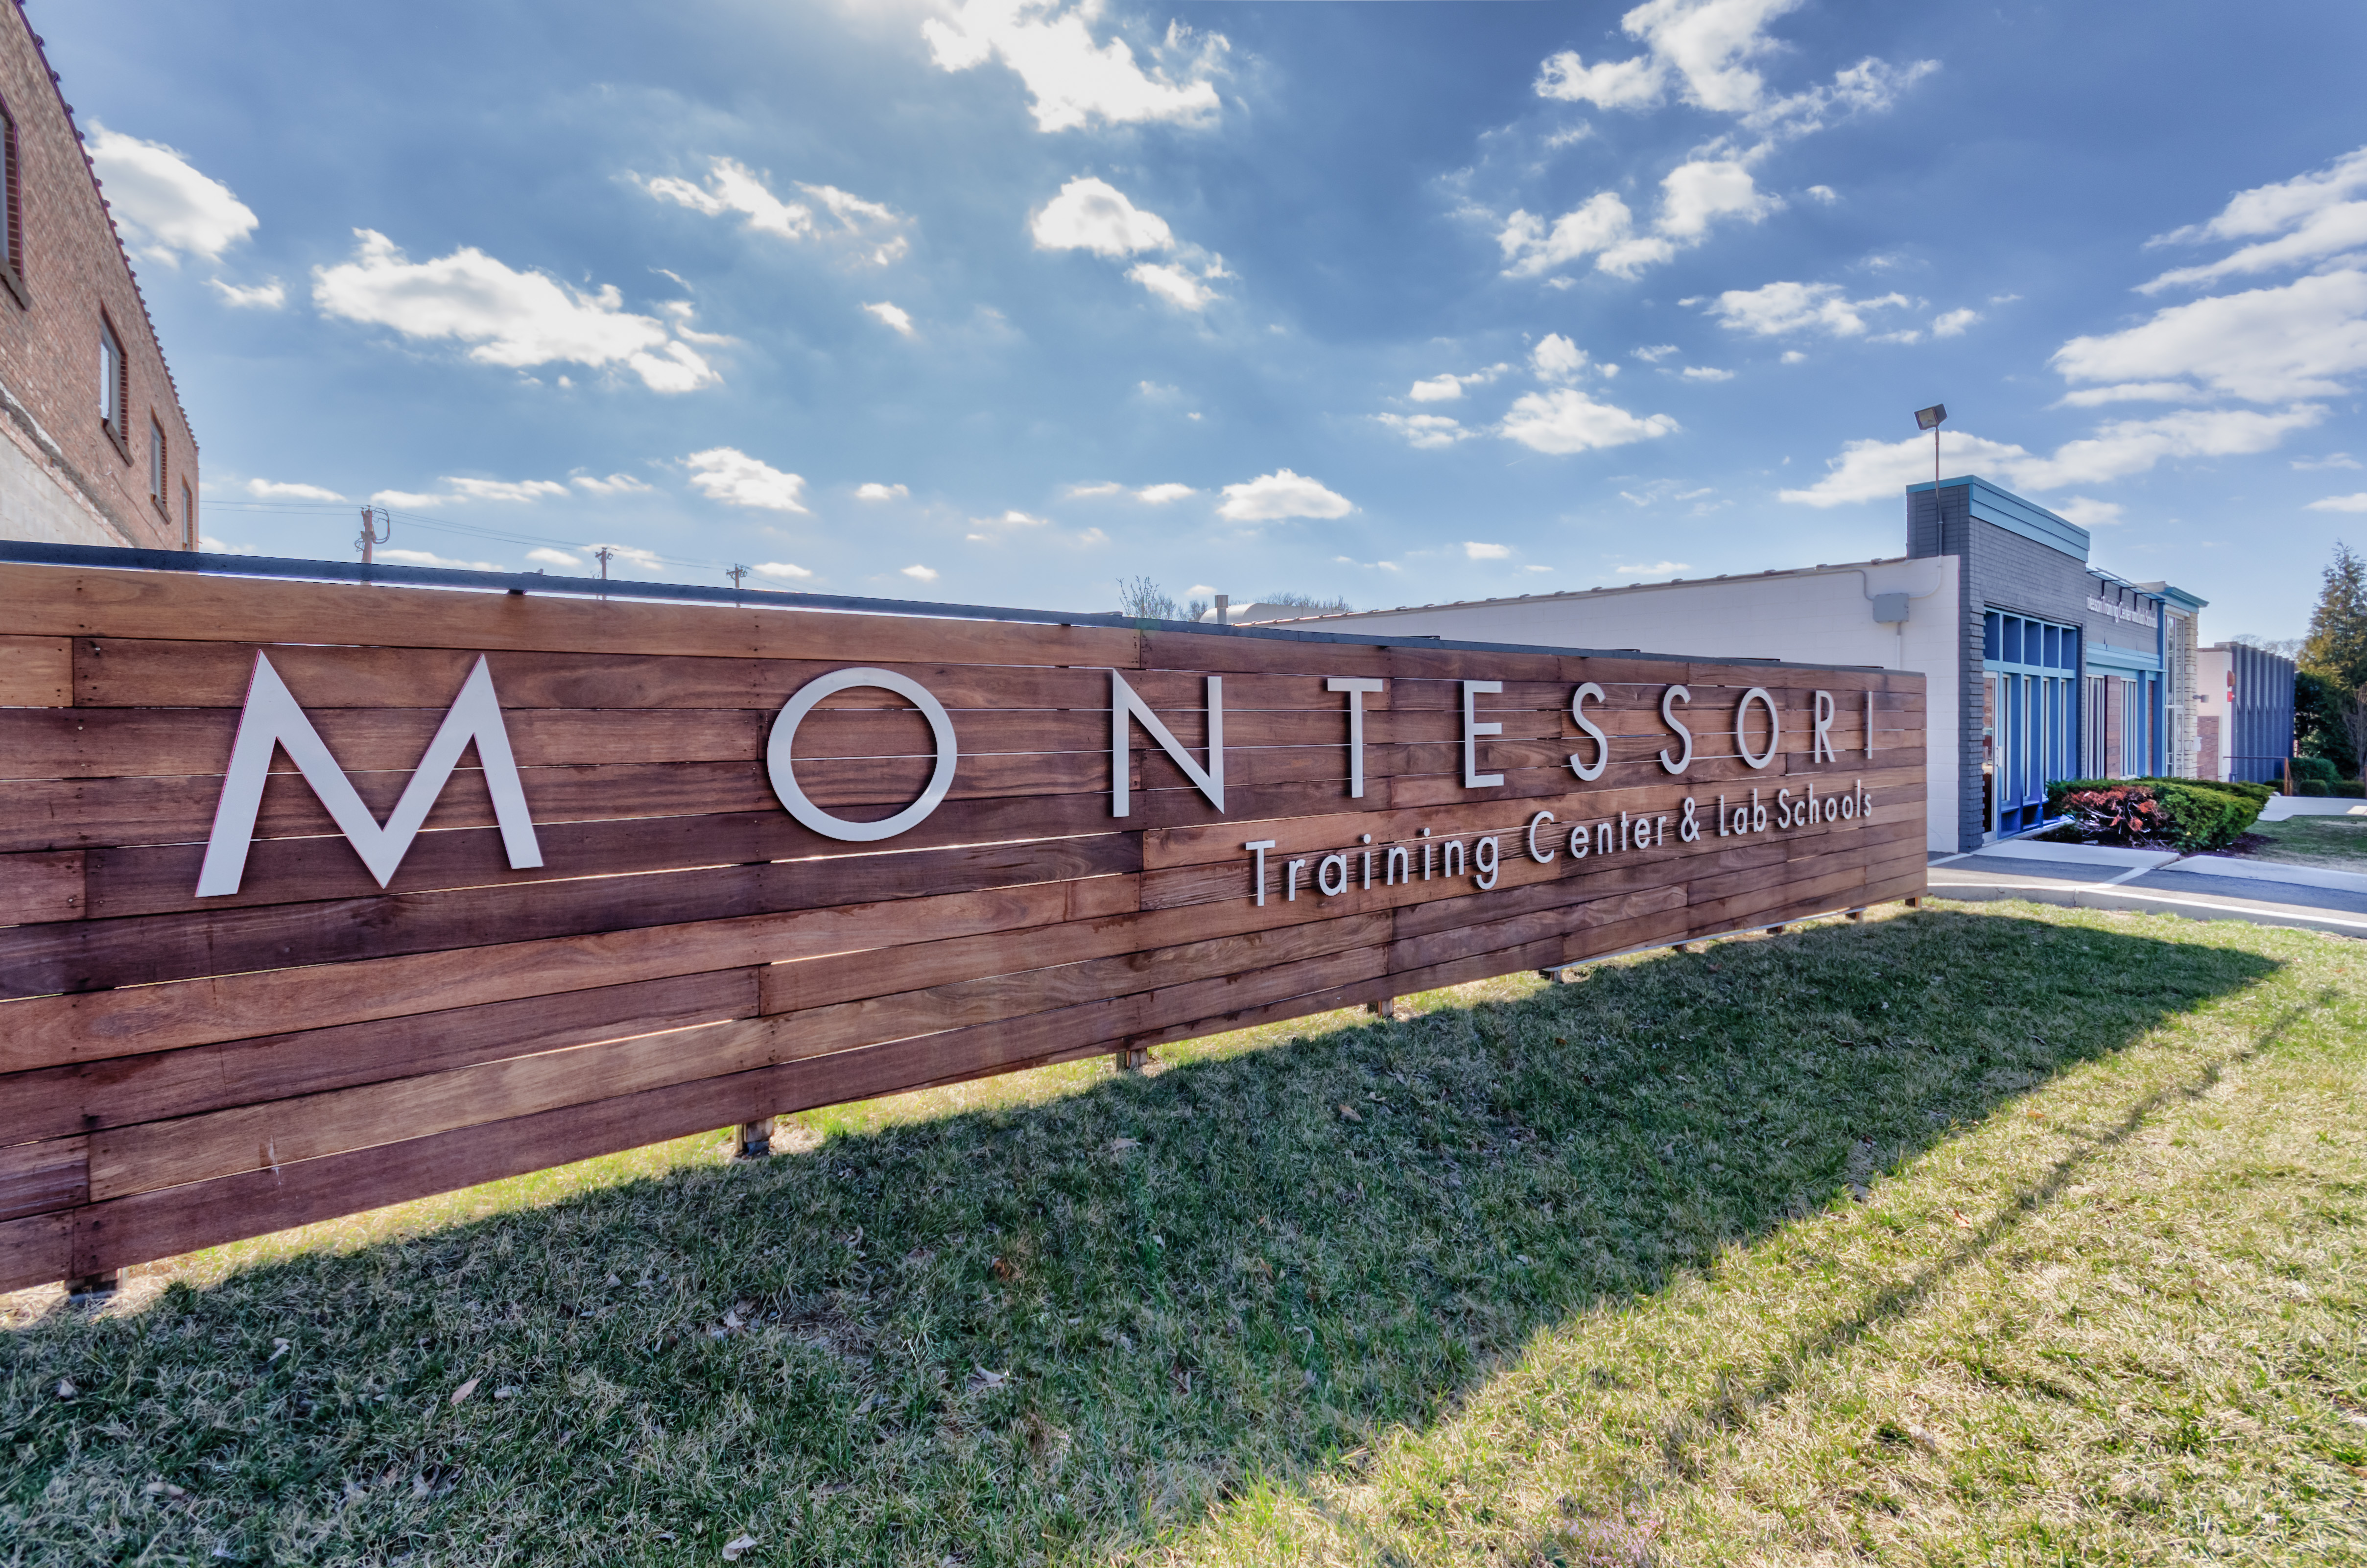 Montessori Training Center + Elementary Lab School at Grand Center signage